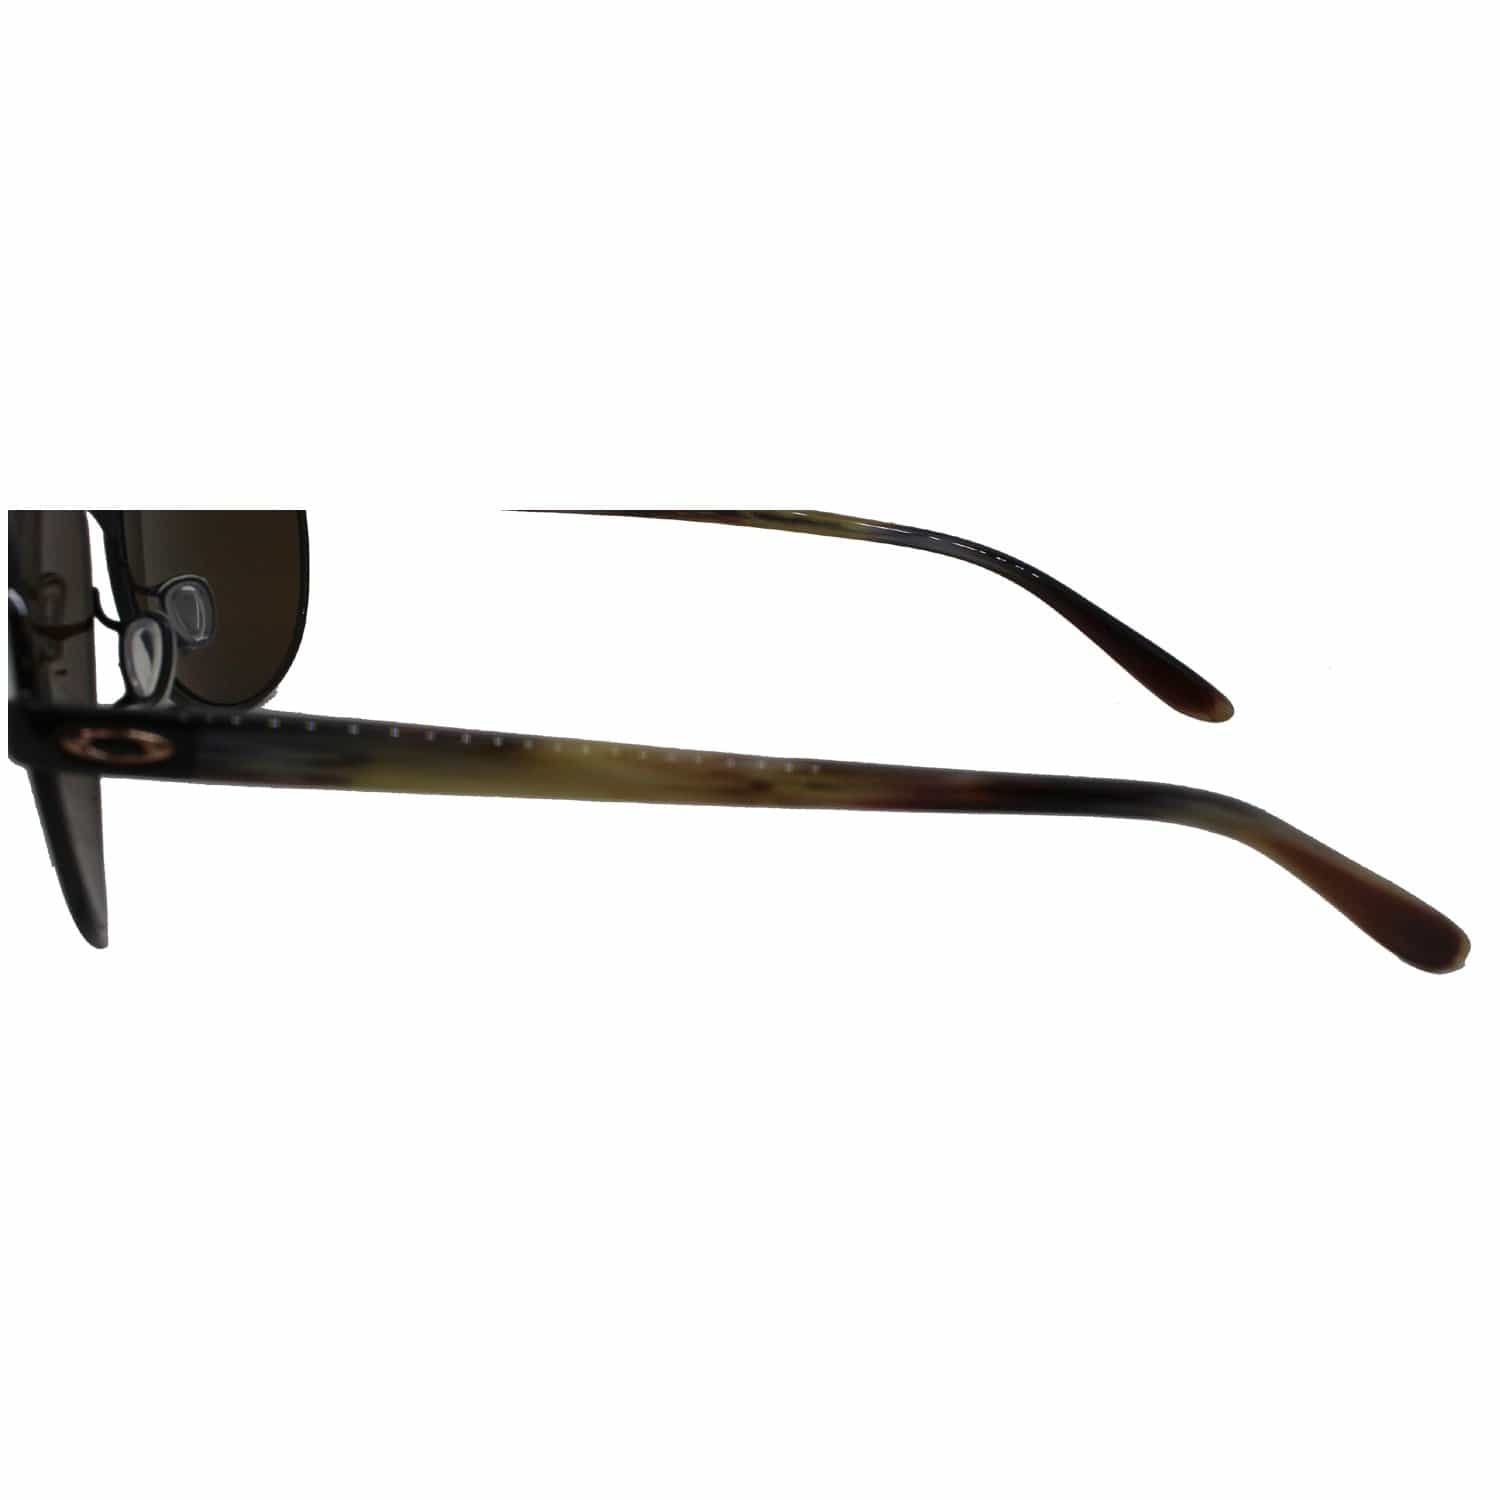 Tie Breaker Prizm Tungsten Polarized Lenses, Rose Gold Frame Sunglasses